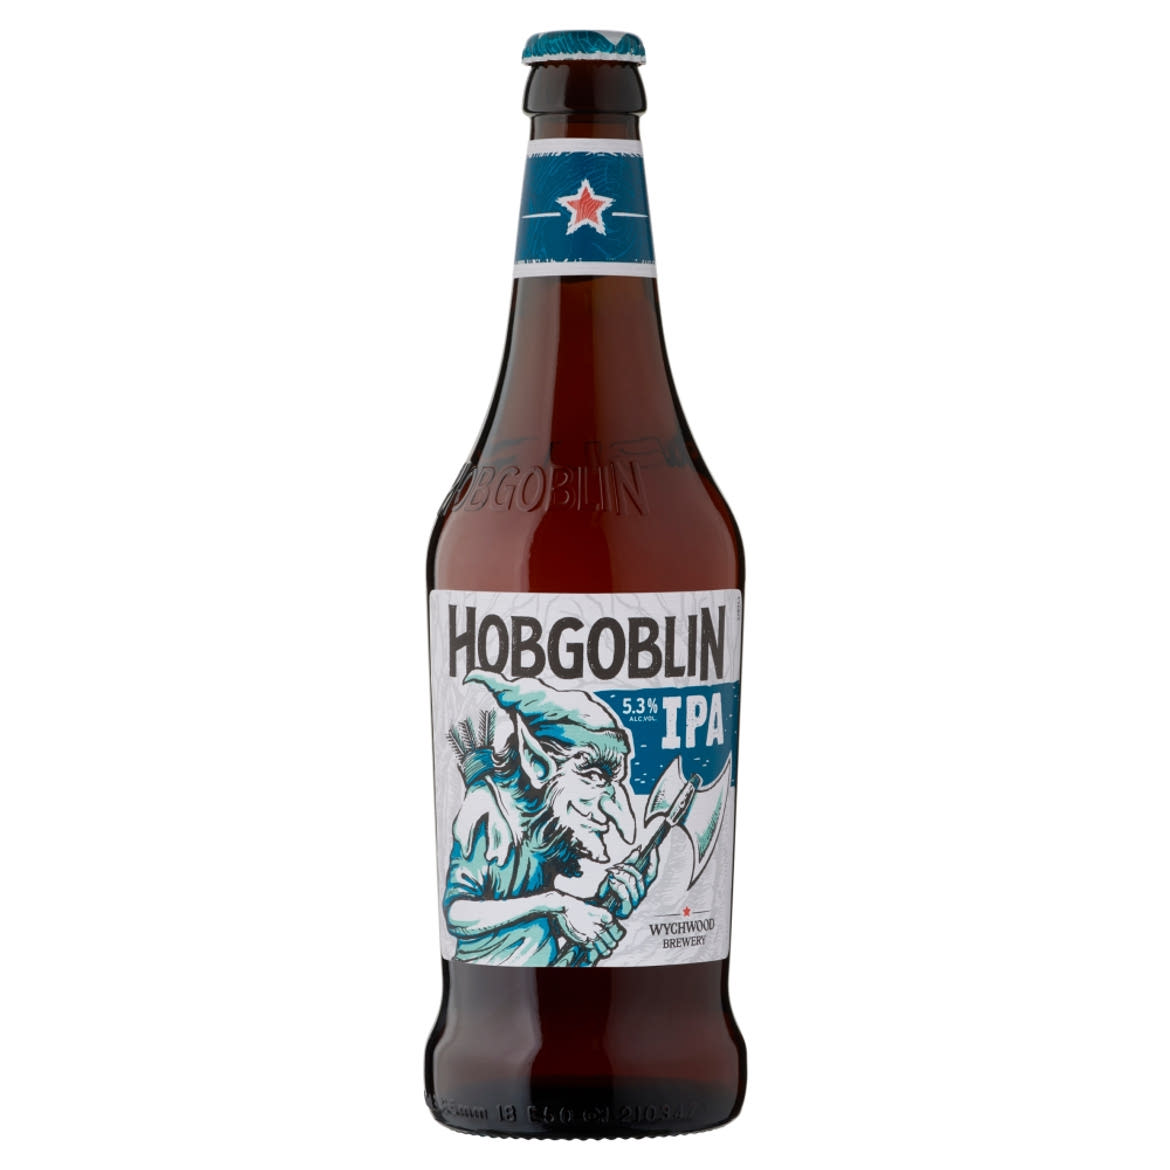 Hobgoblin IPA angol világos sör 5,3%